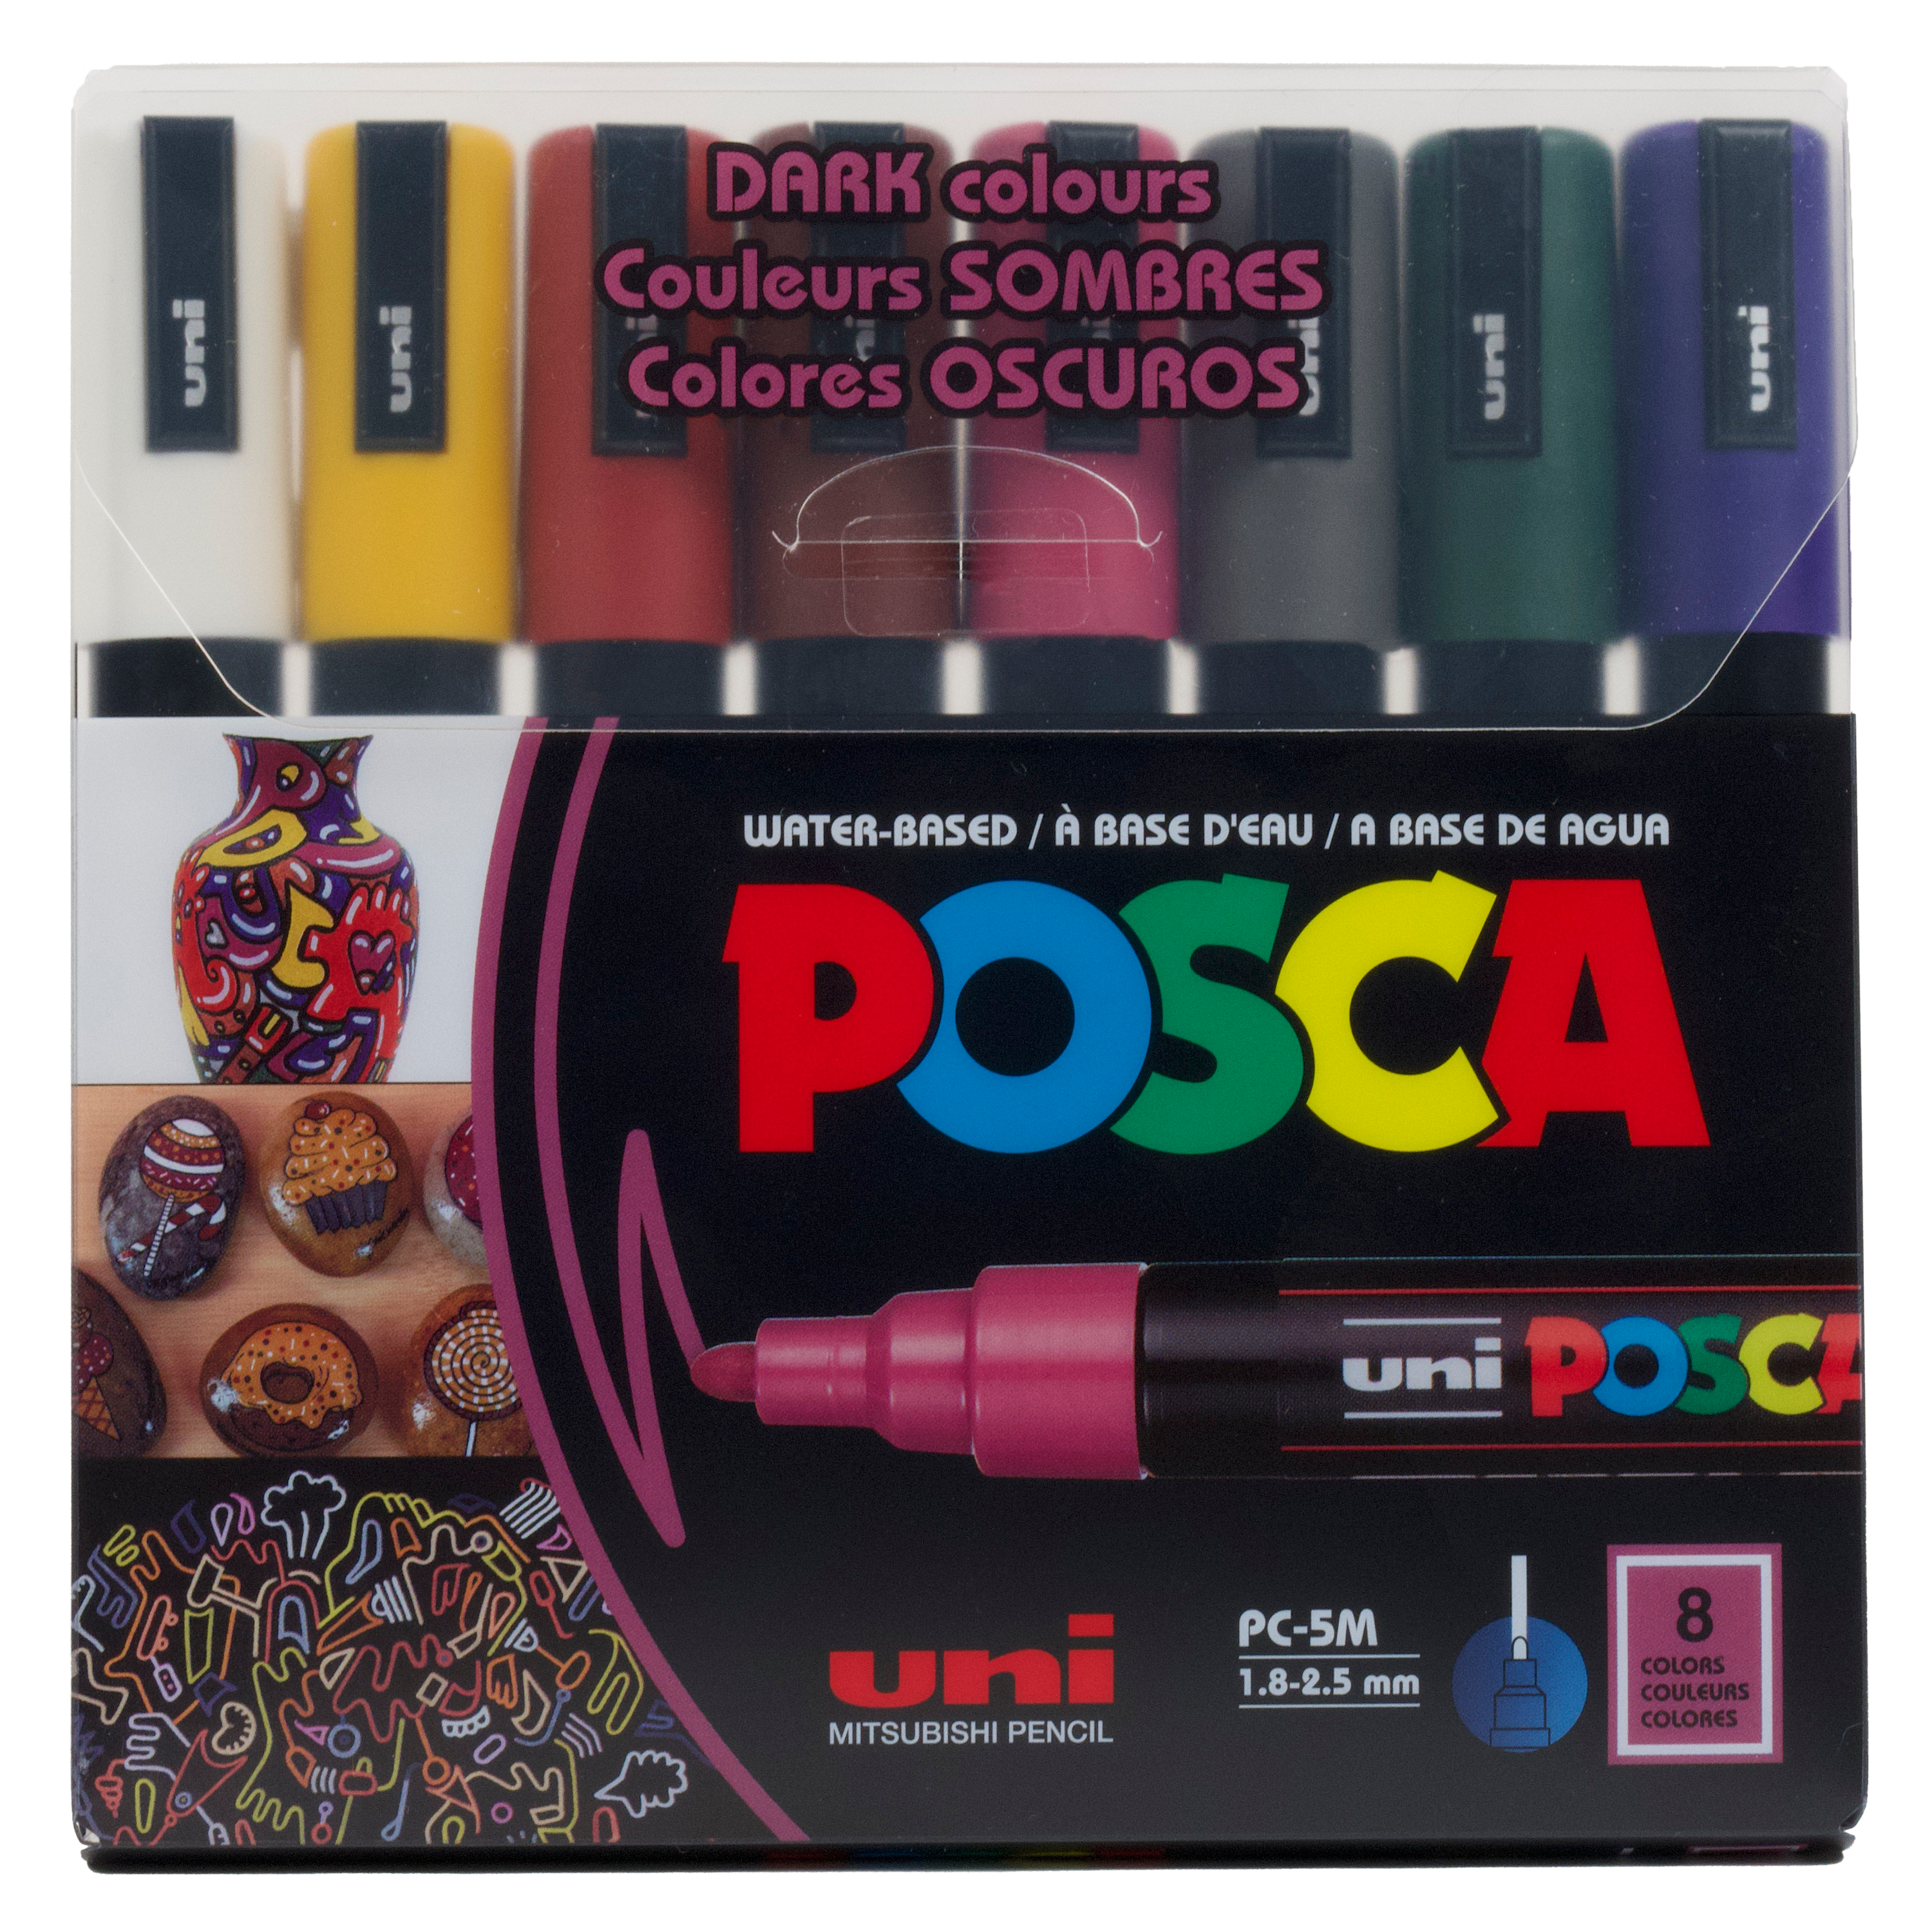 Uni Posca Marker Pen 5M Set Of 8 Dark Colors